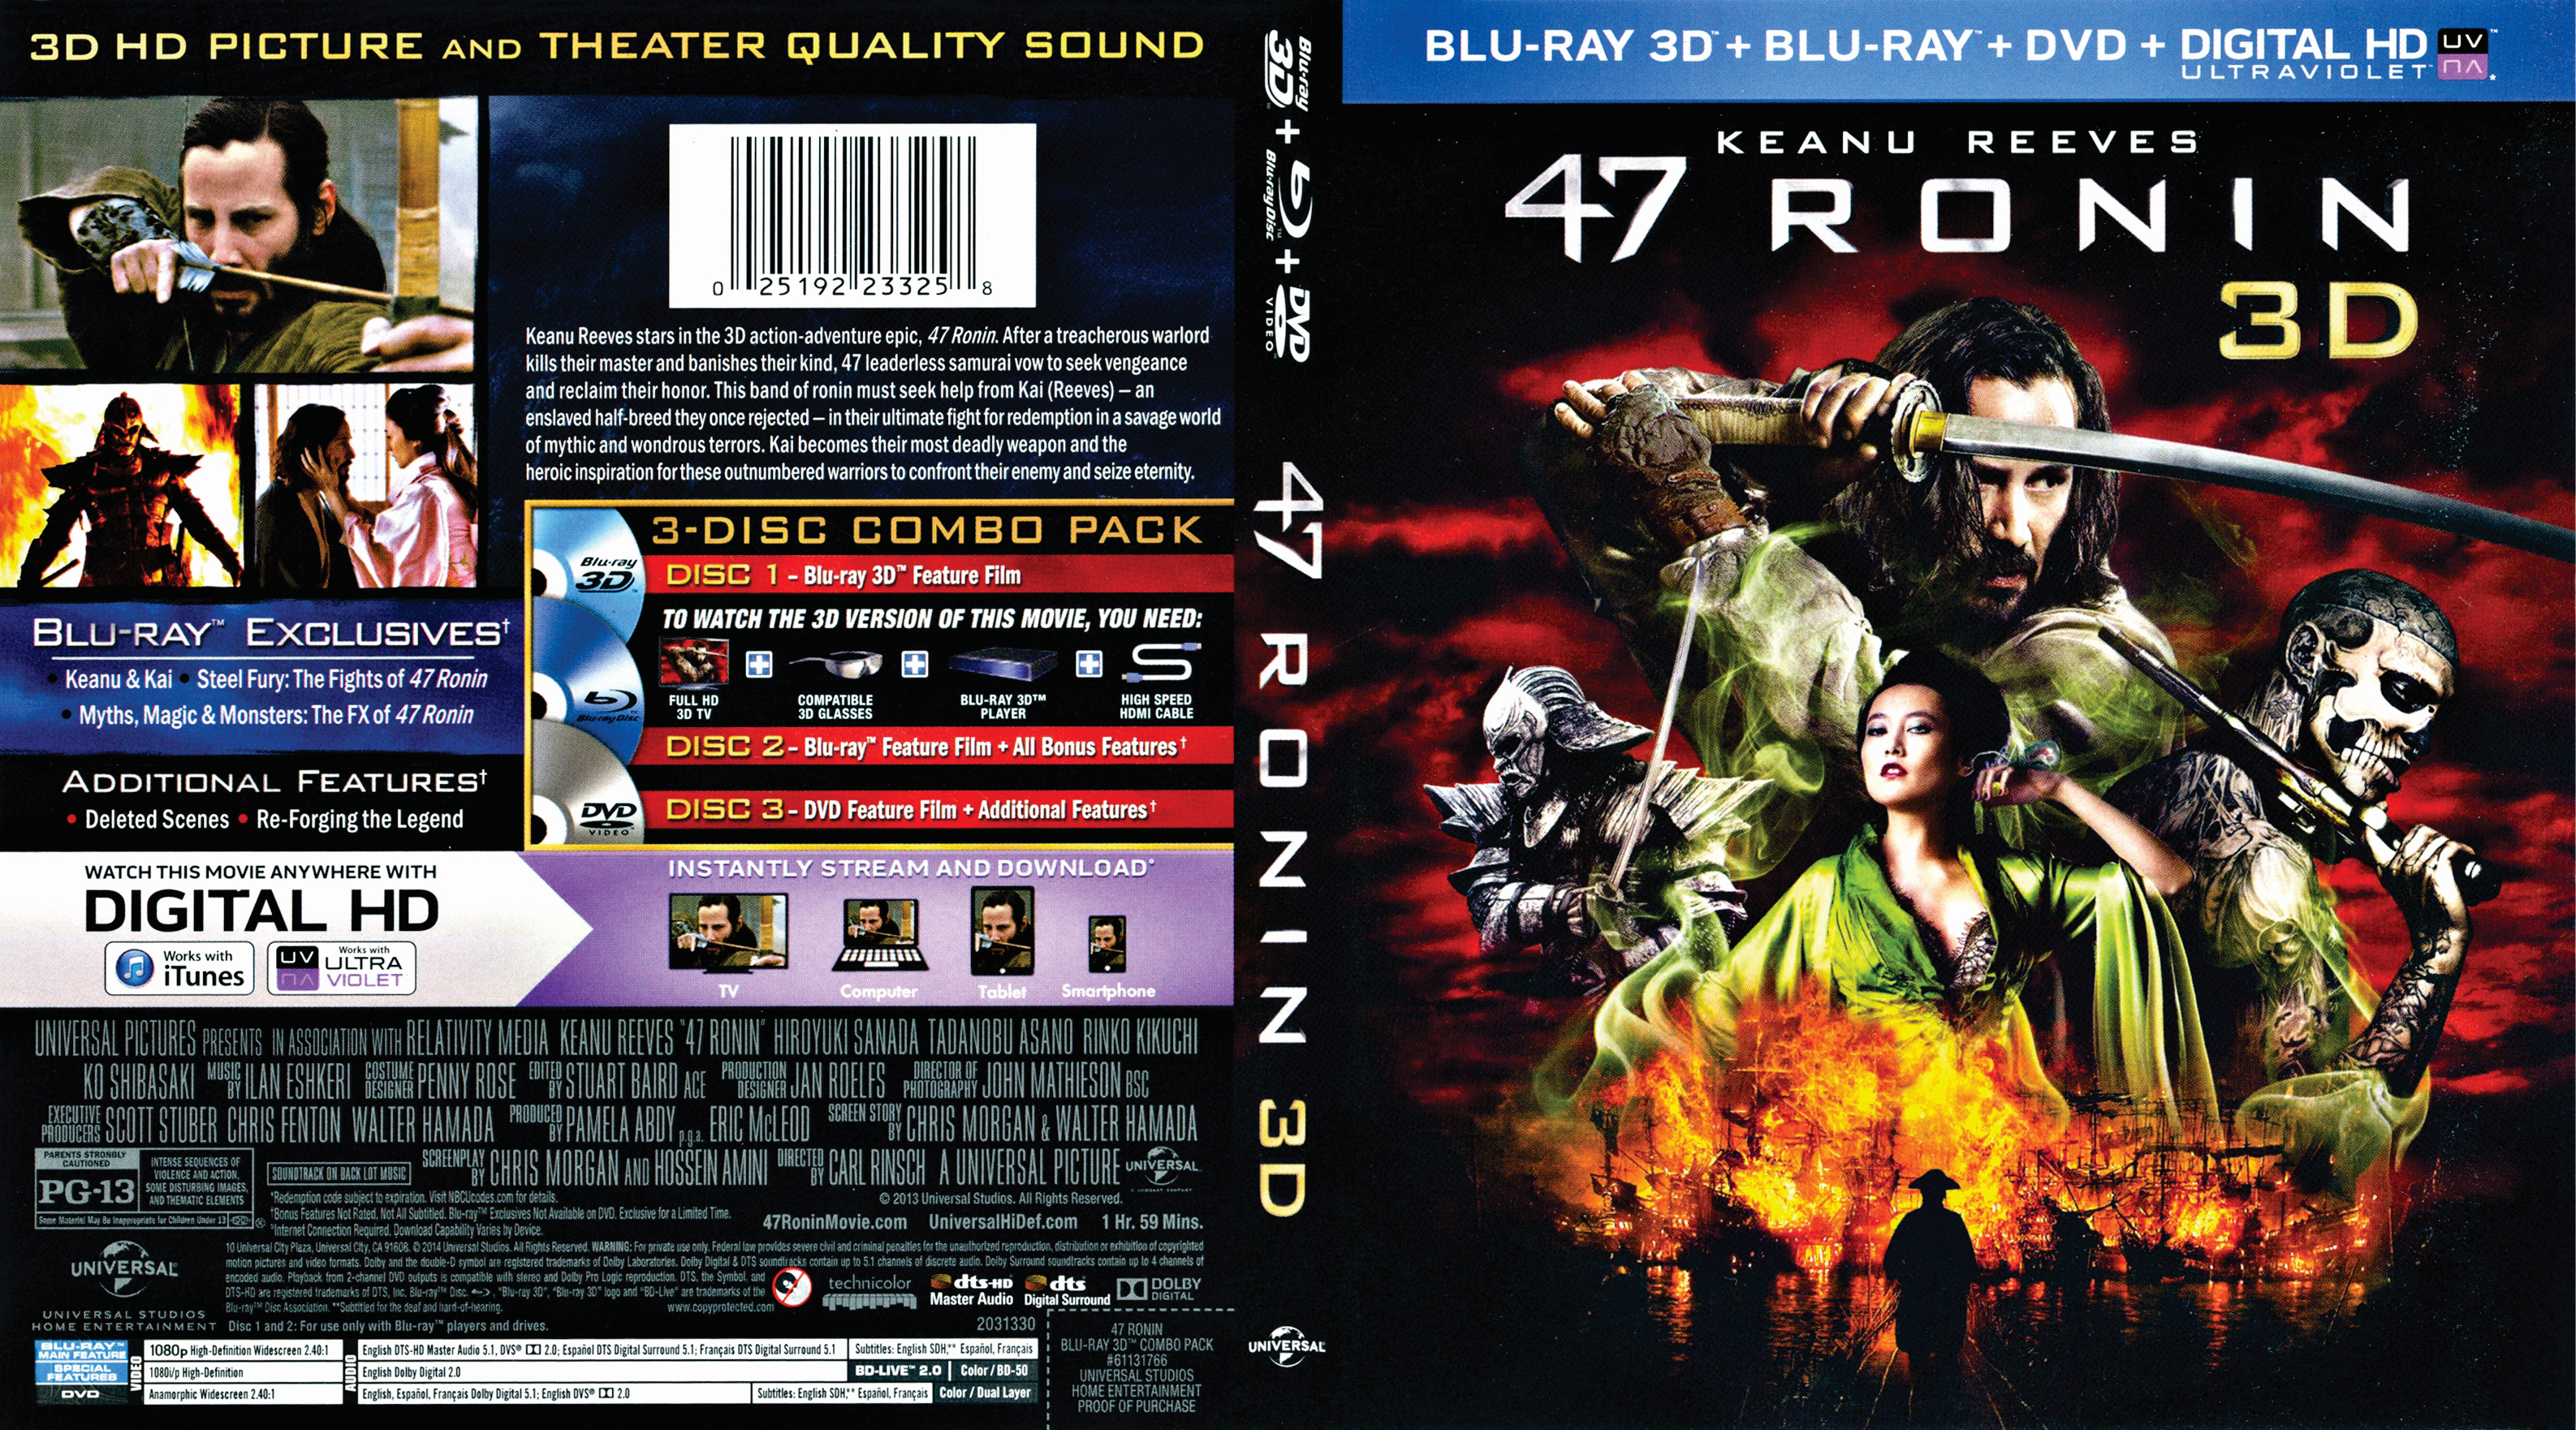 Jaquette DVD 47 ronin Zone 1 (BLU-RAY)